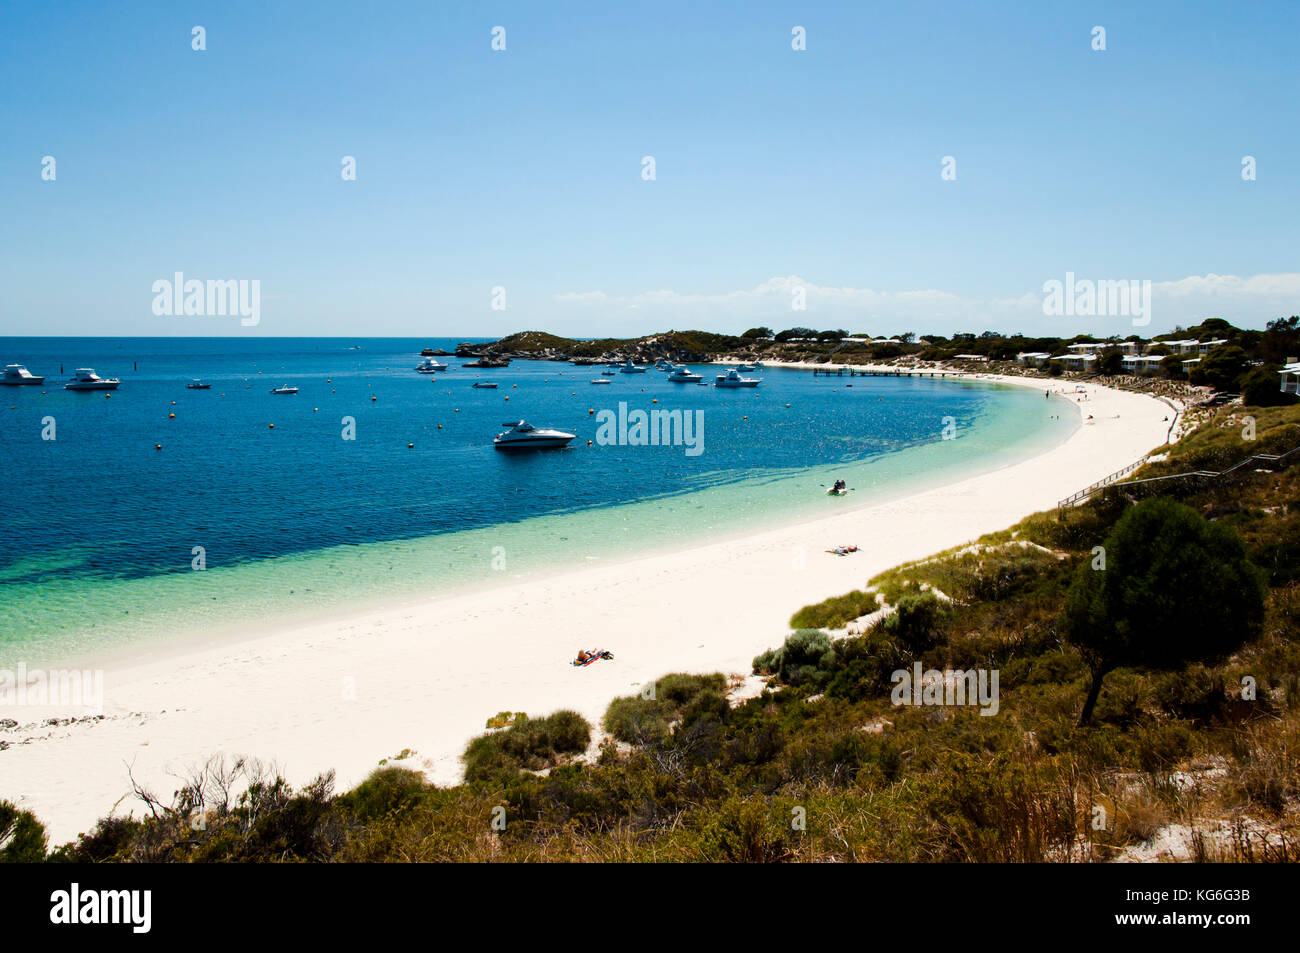 Geordie bay - Rottnest Island - australia Foto de stock